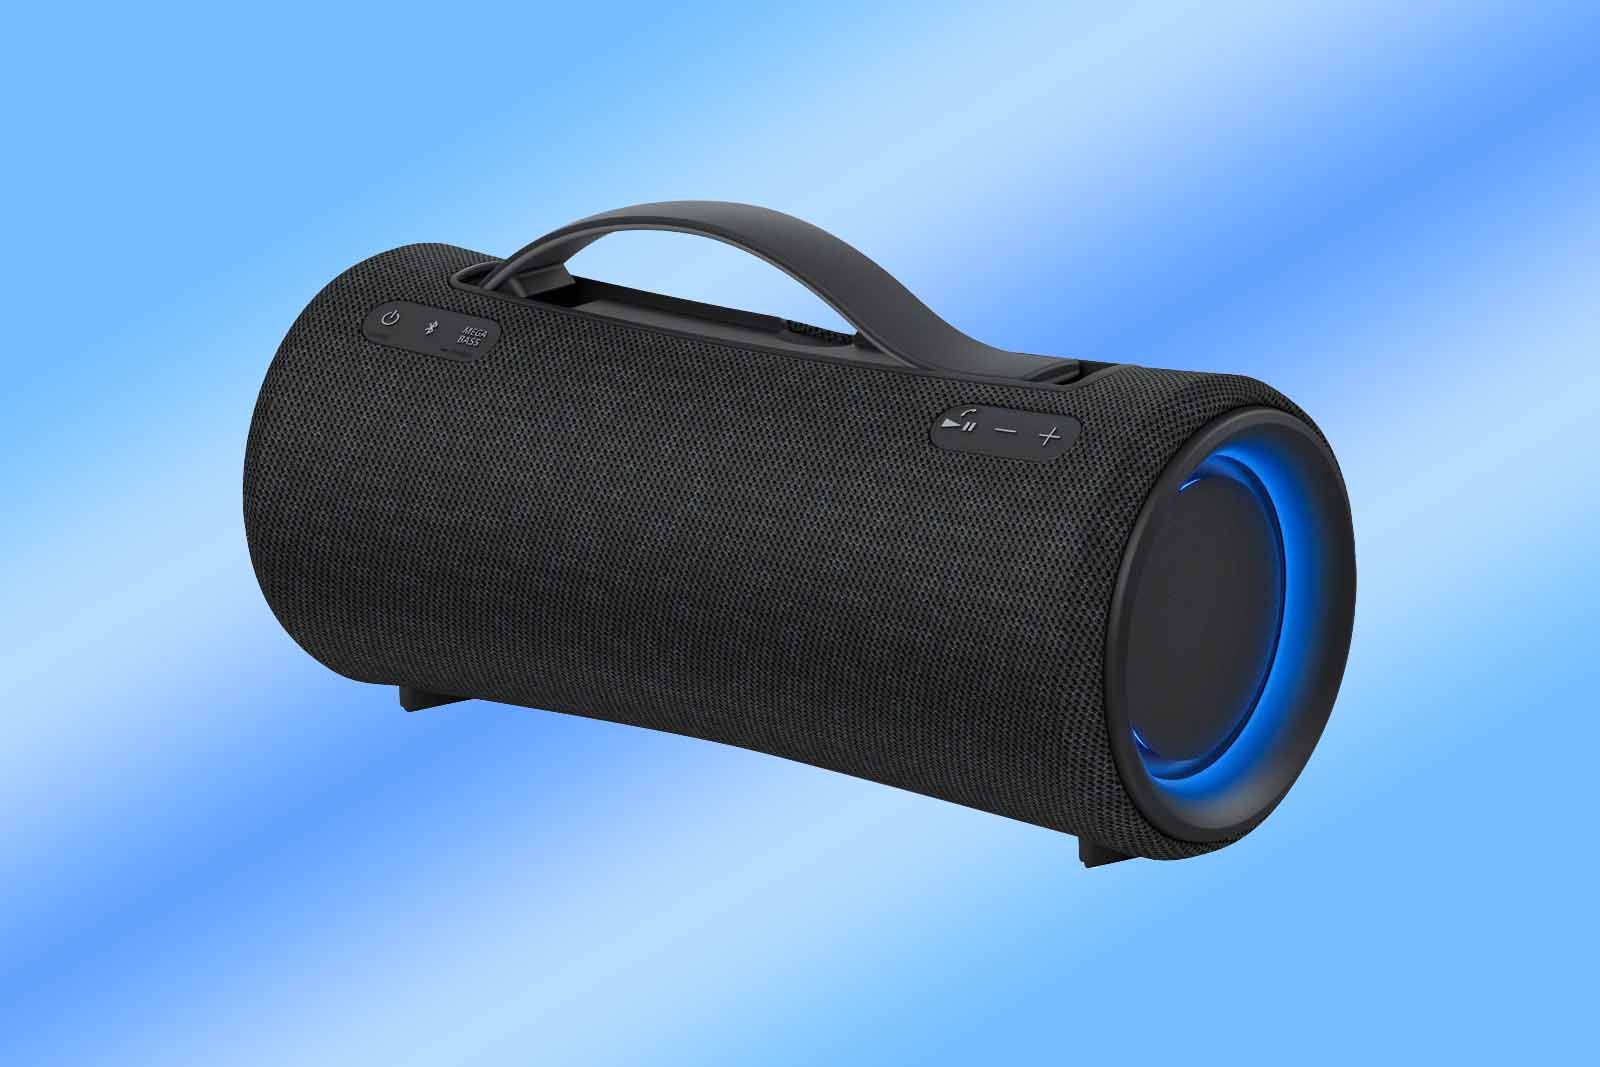 Sony XG300 speaker on a blue gradient background